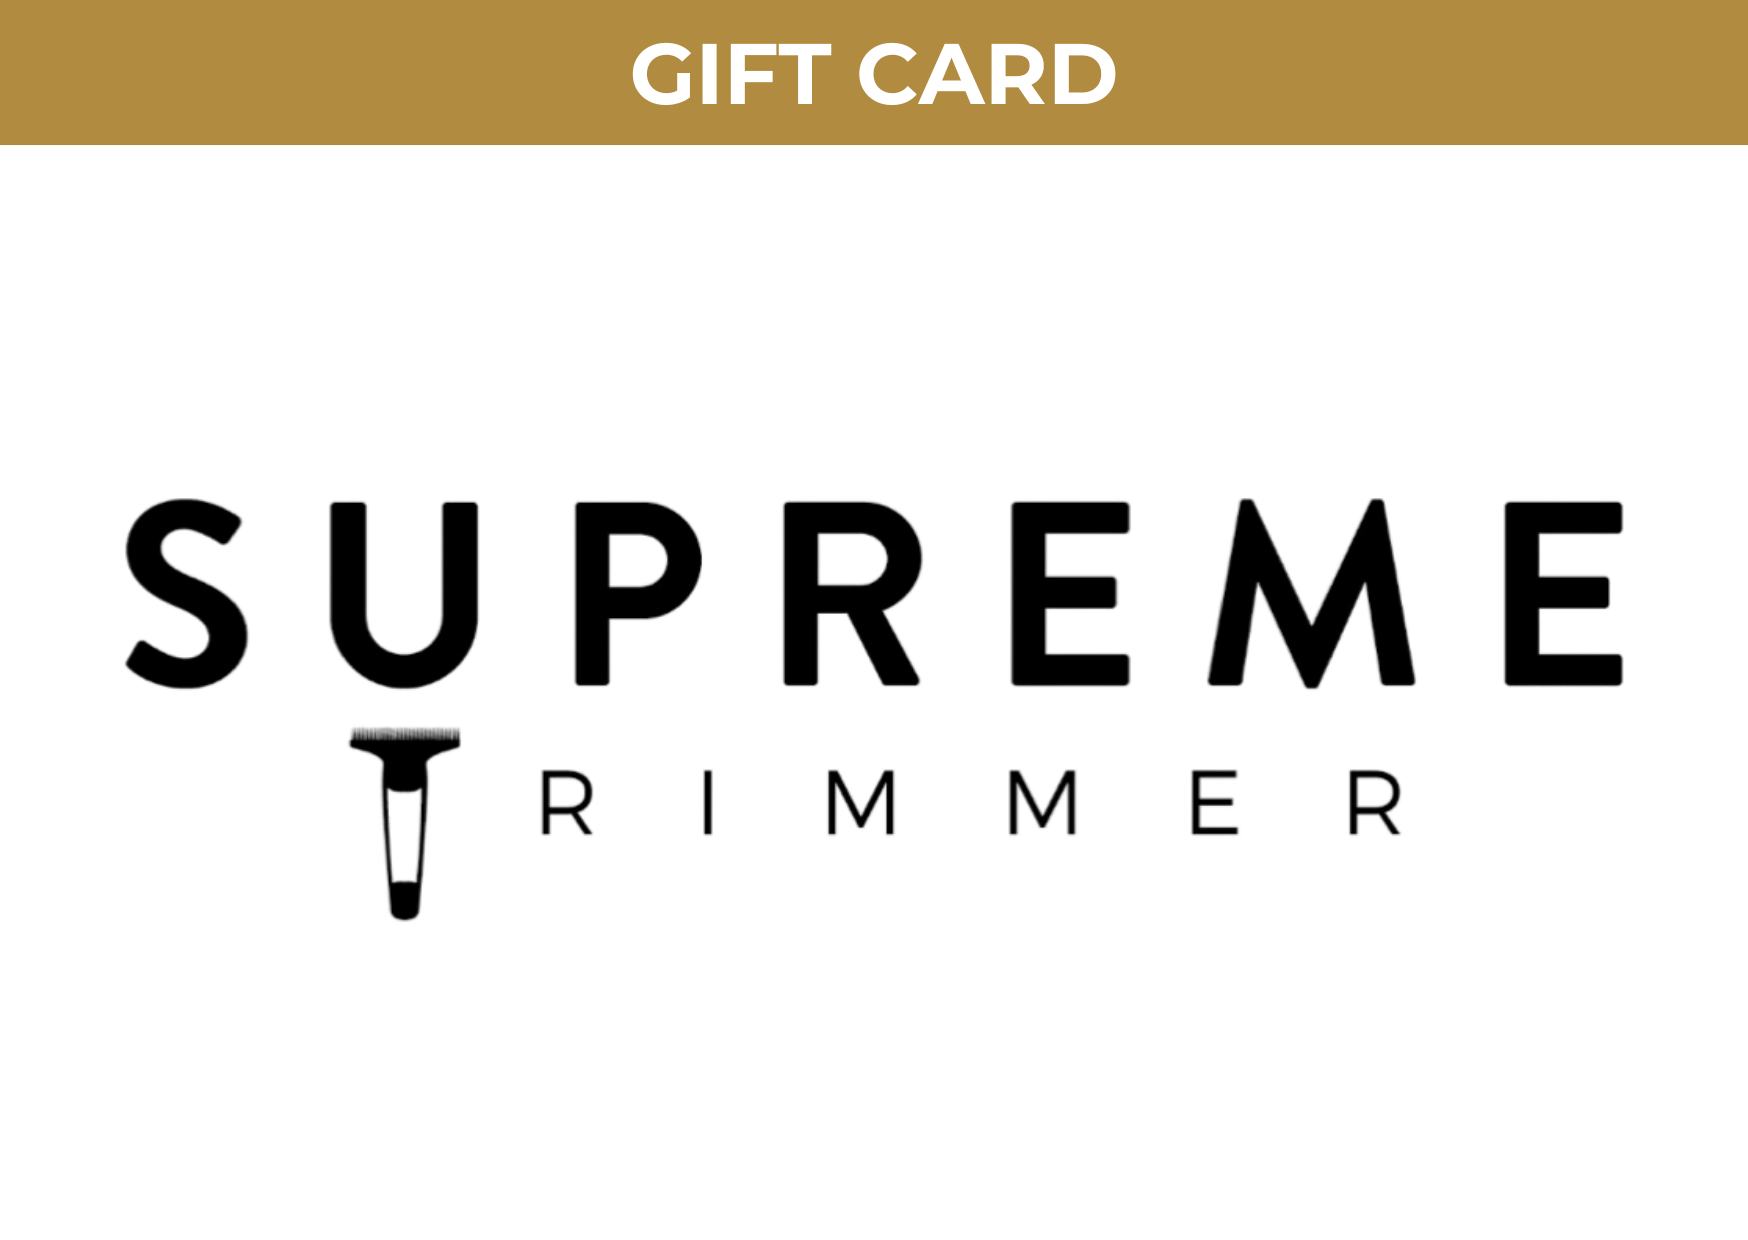 Supreme Trimmer Gift Card 